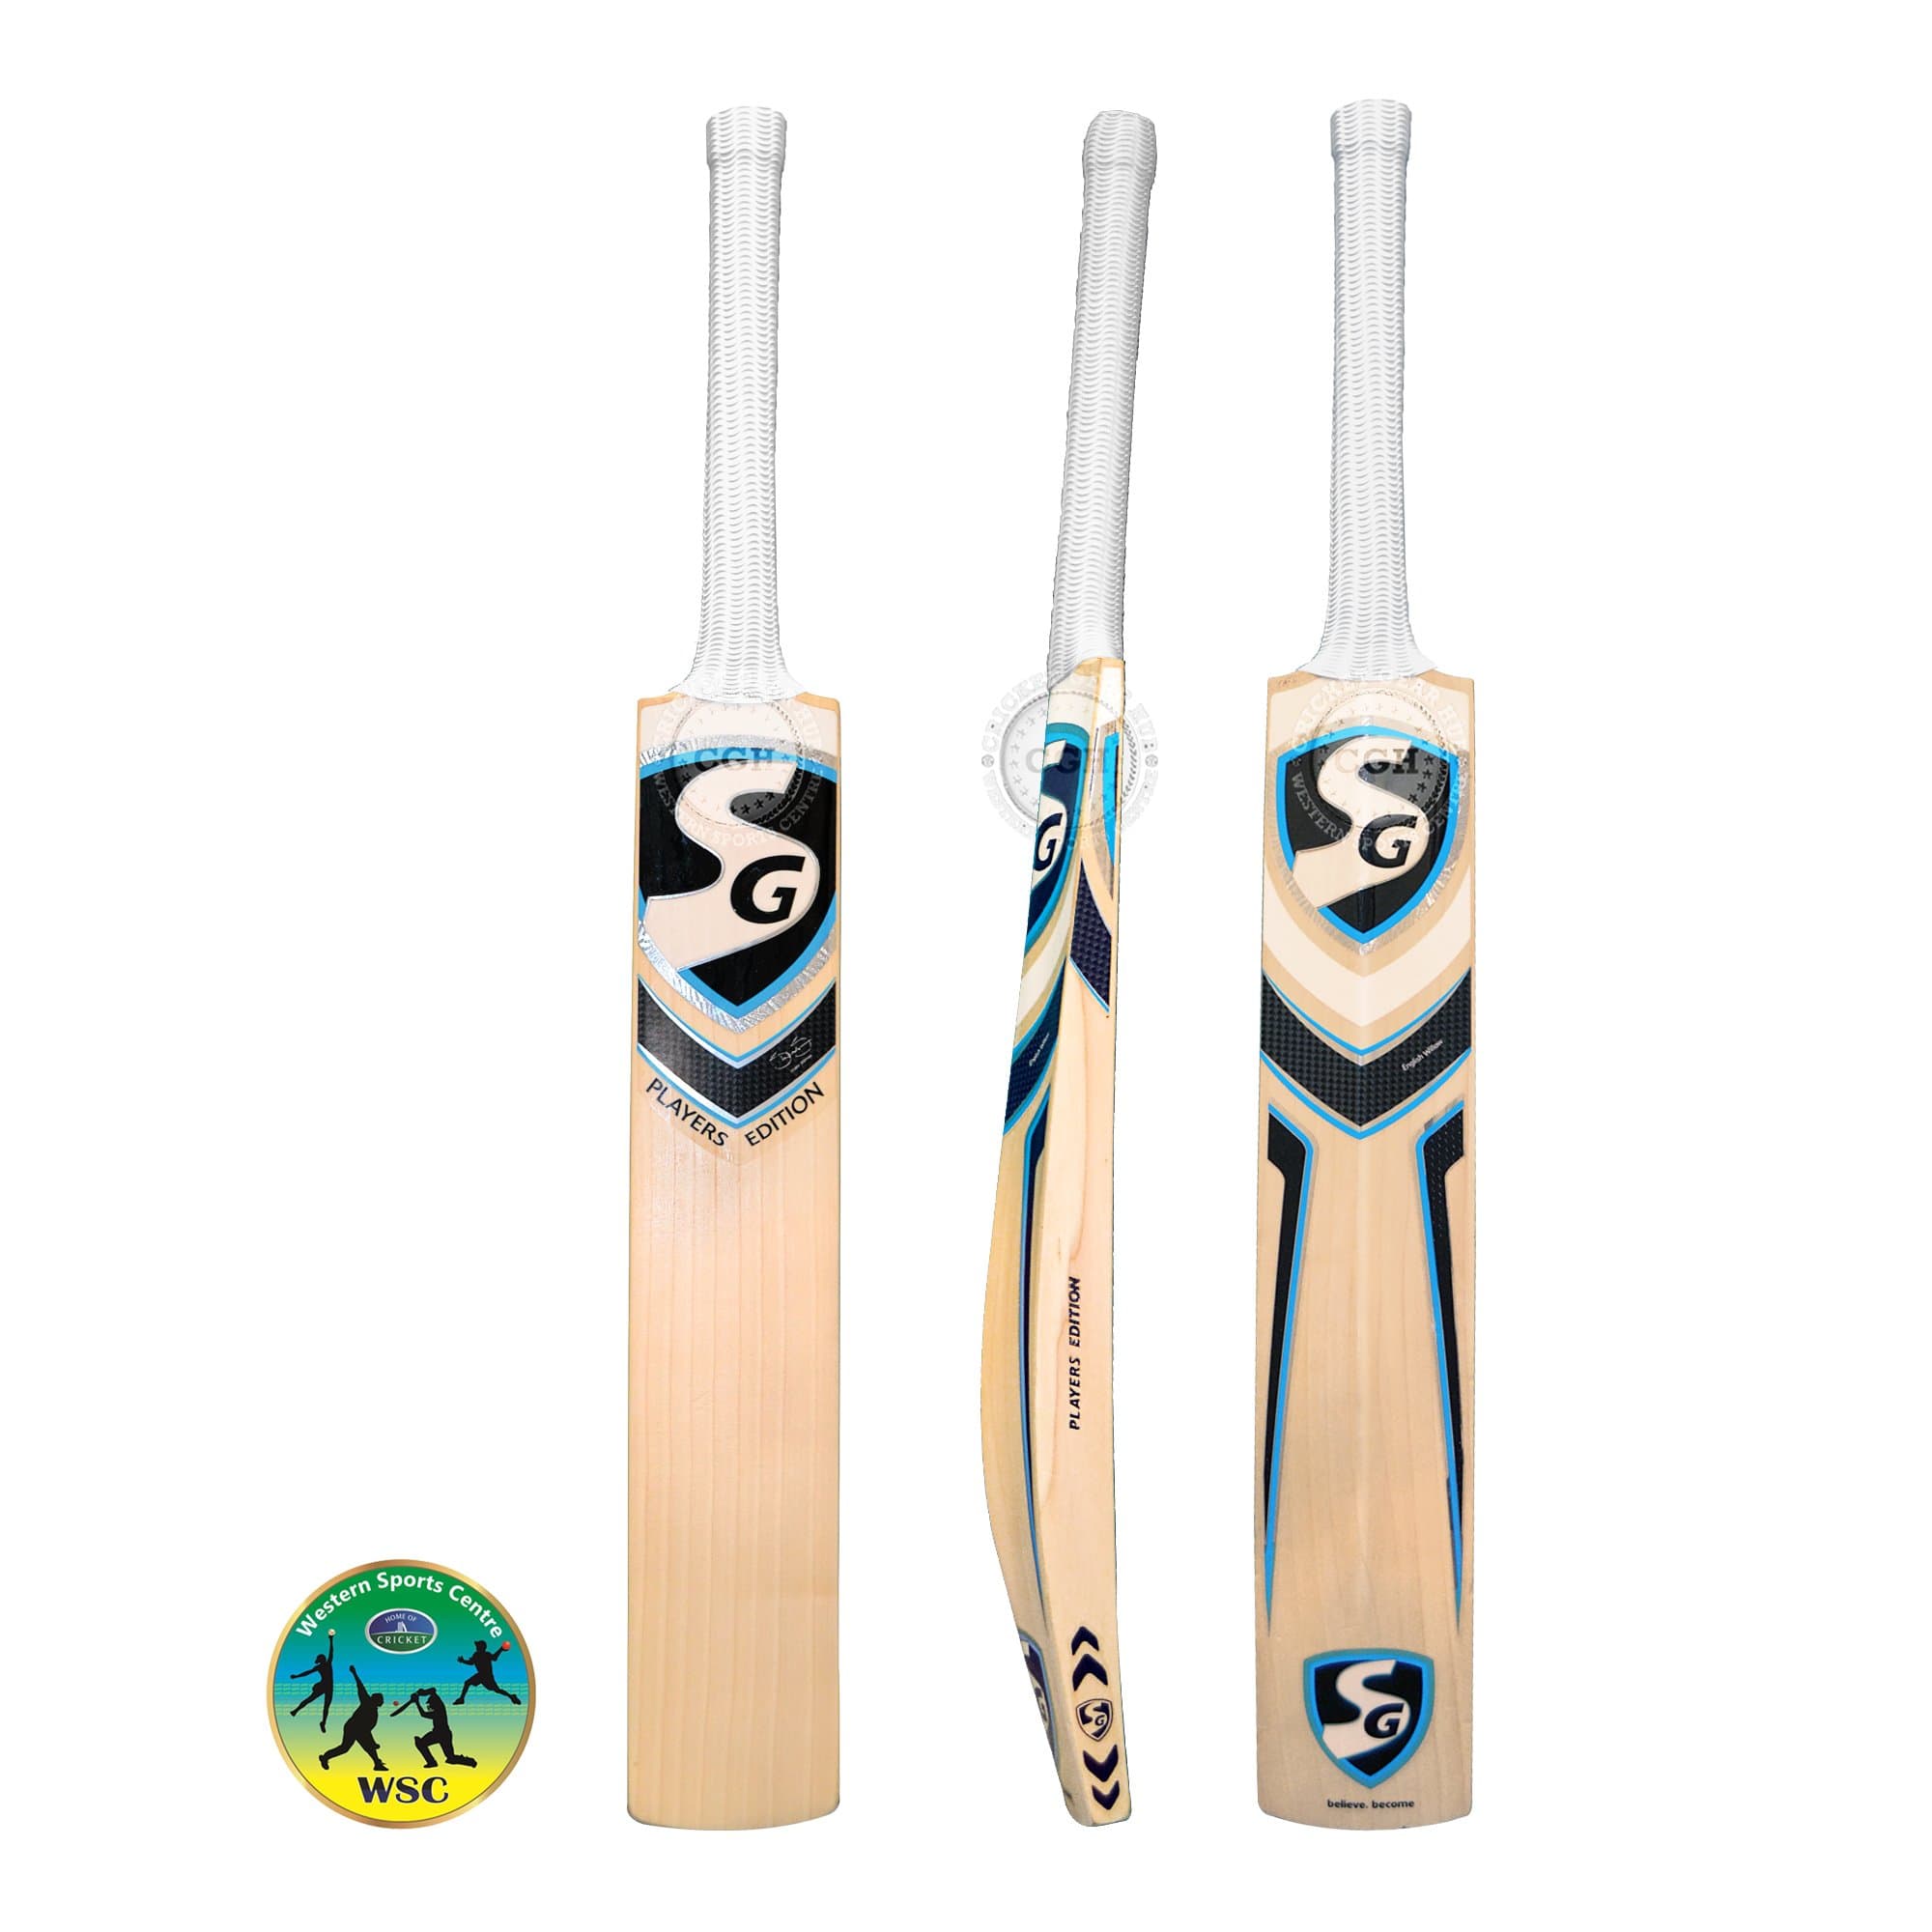 SG Cricket Bats Short Hand SG Players Edition Cricket Bat 2019